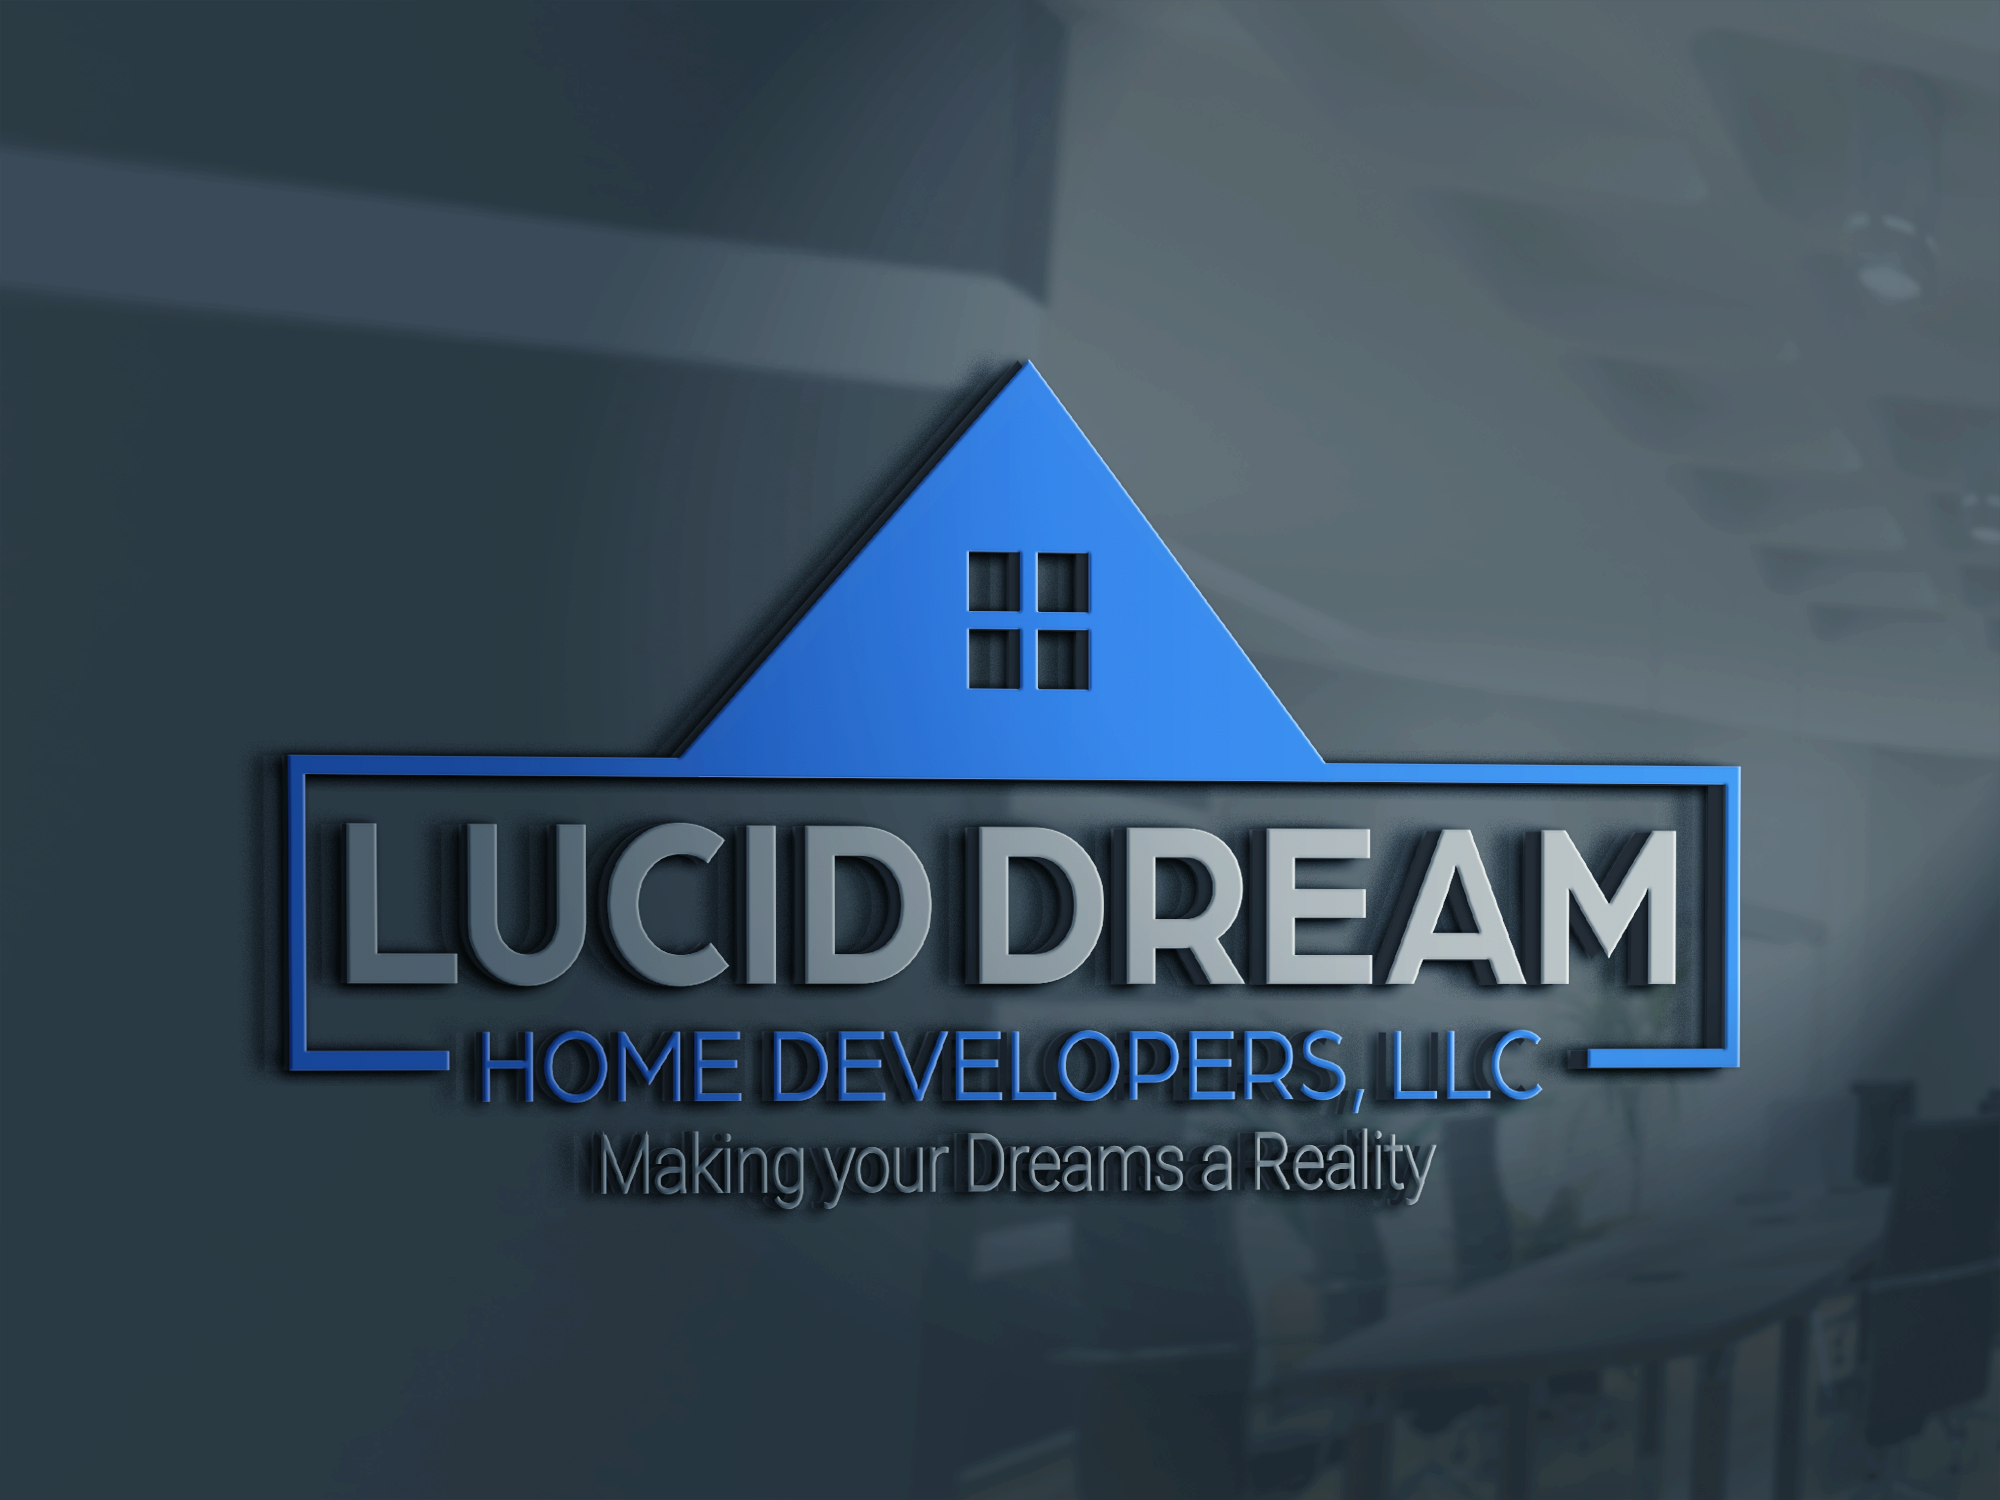 Lucid Dream Home Developers, LLC | Better Business Bureau® Profile